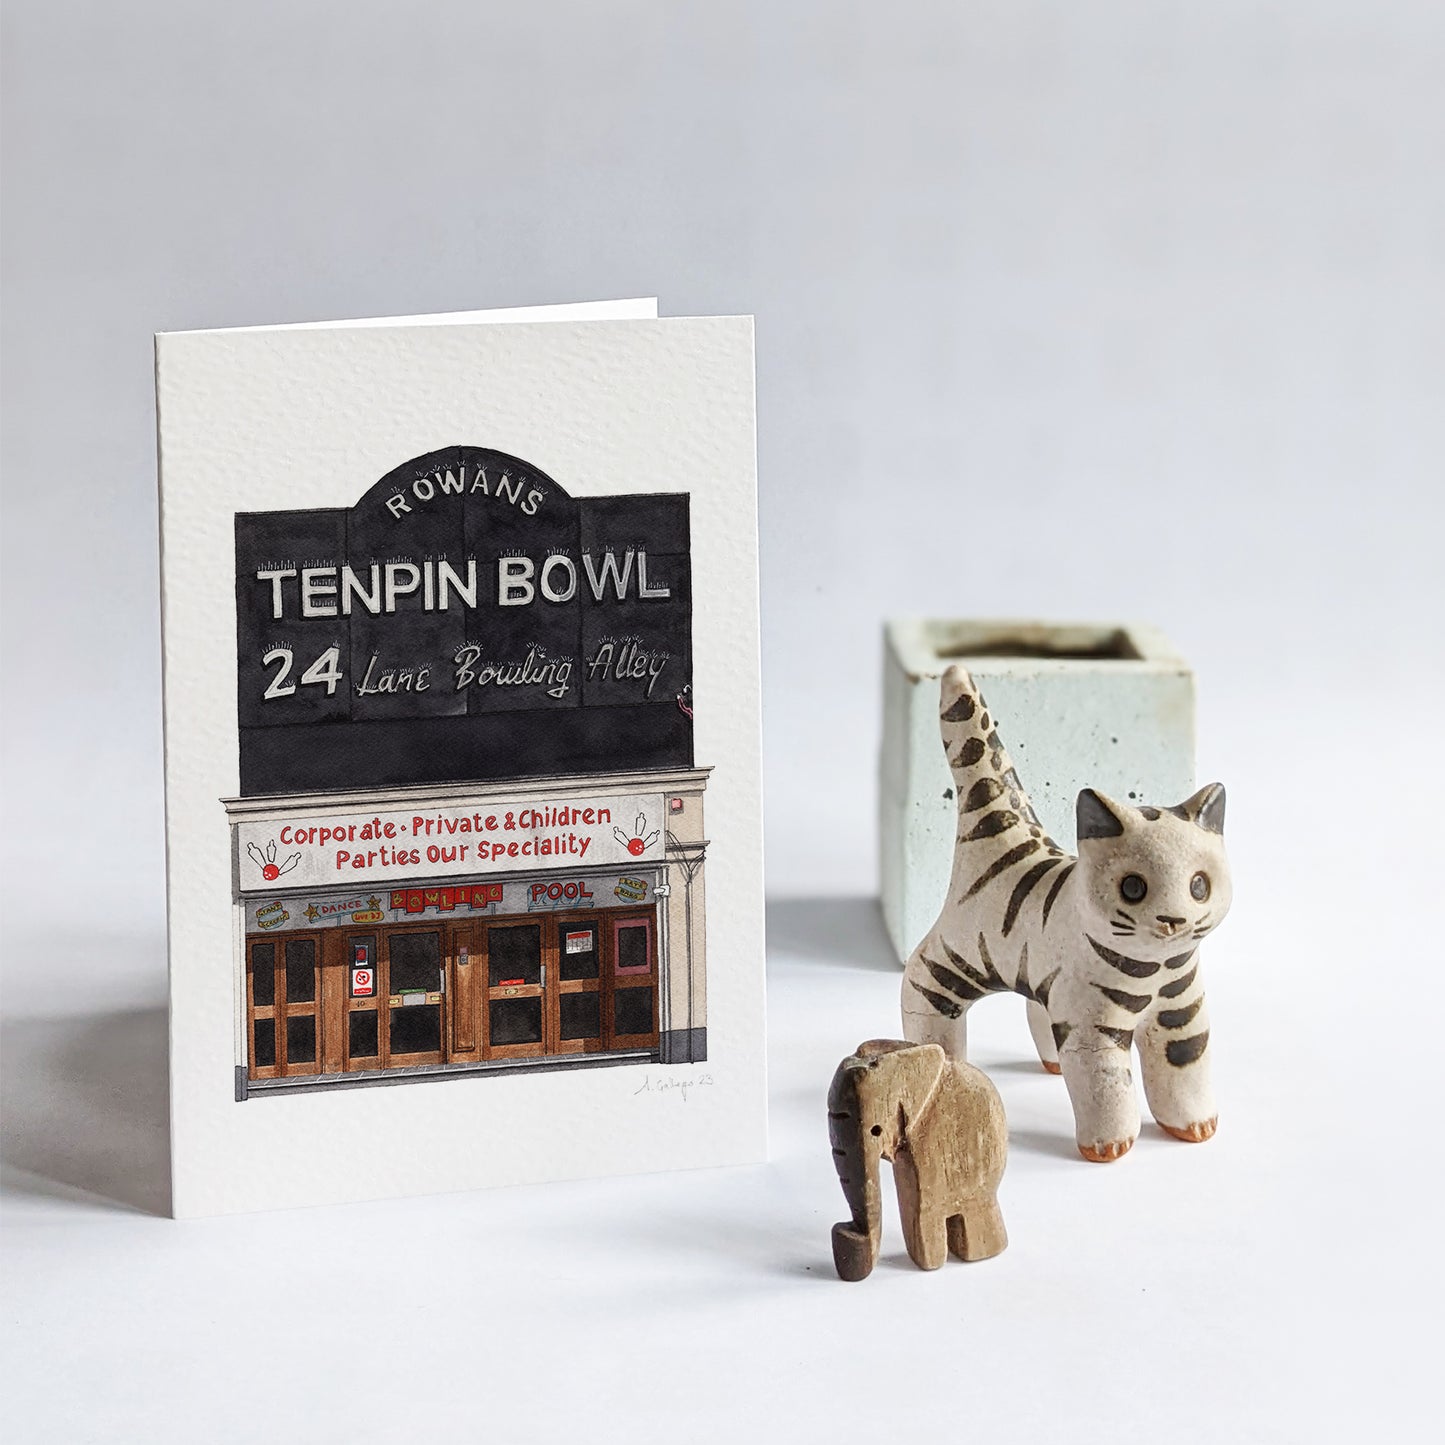 Finsbury Park - Rowans Tenpin Bowl - Greeting card with envelope - Islington